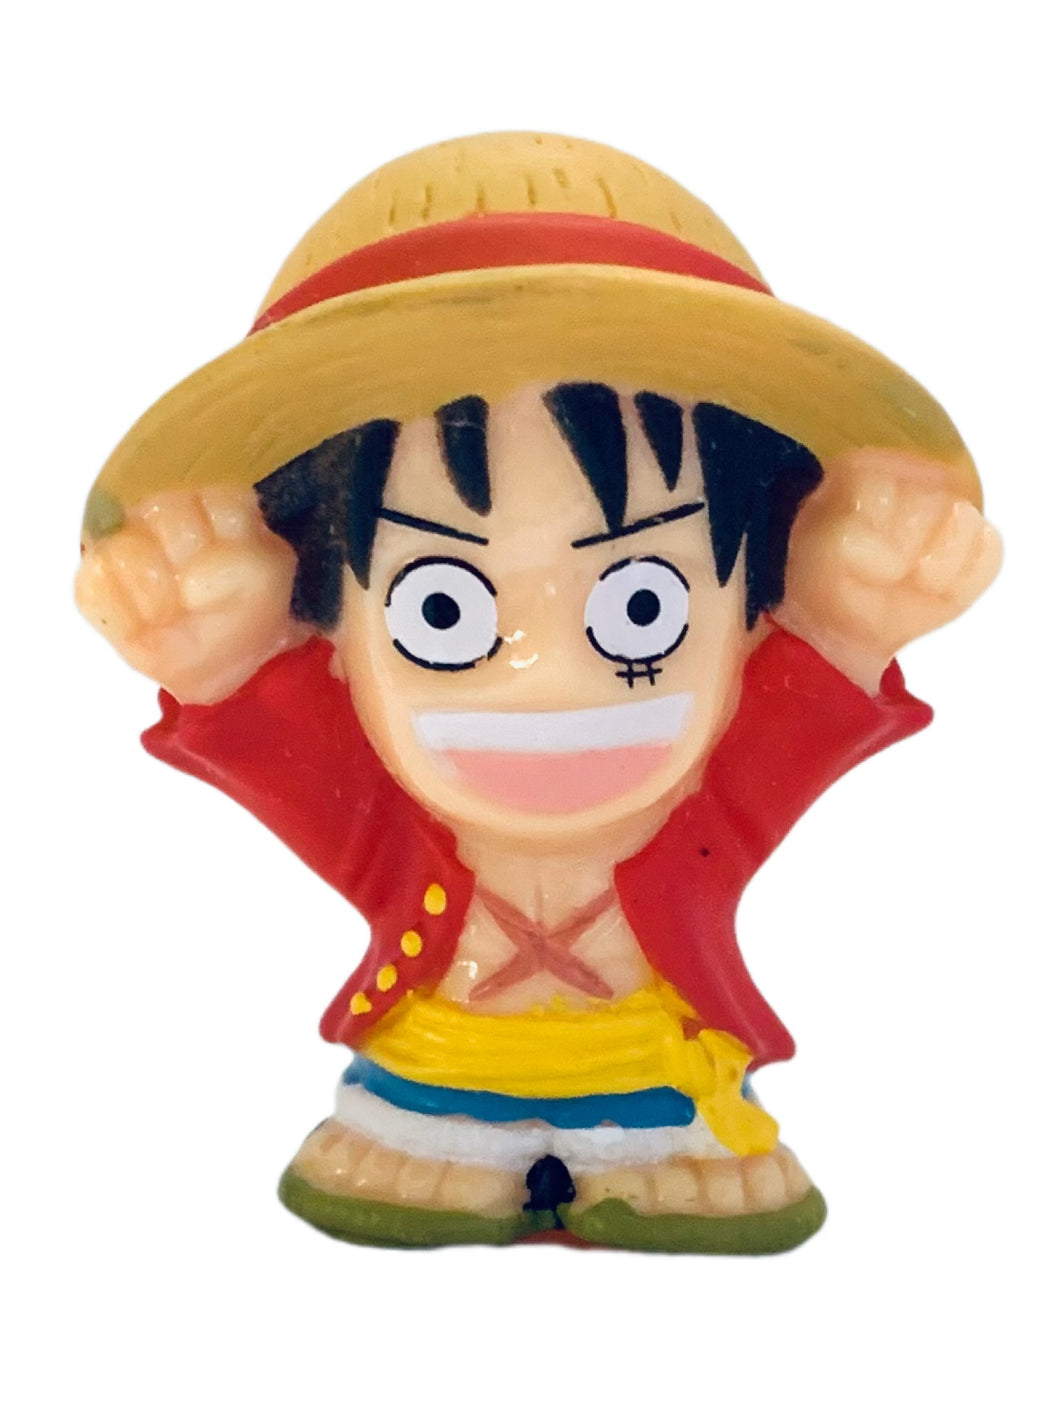 One Piece - Monkey D. Luffy - Finger Puppet - Chibi Colle Bag Part 10 - Landing on Punk Hazard Island!